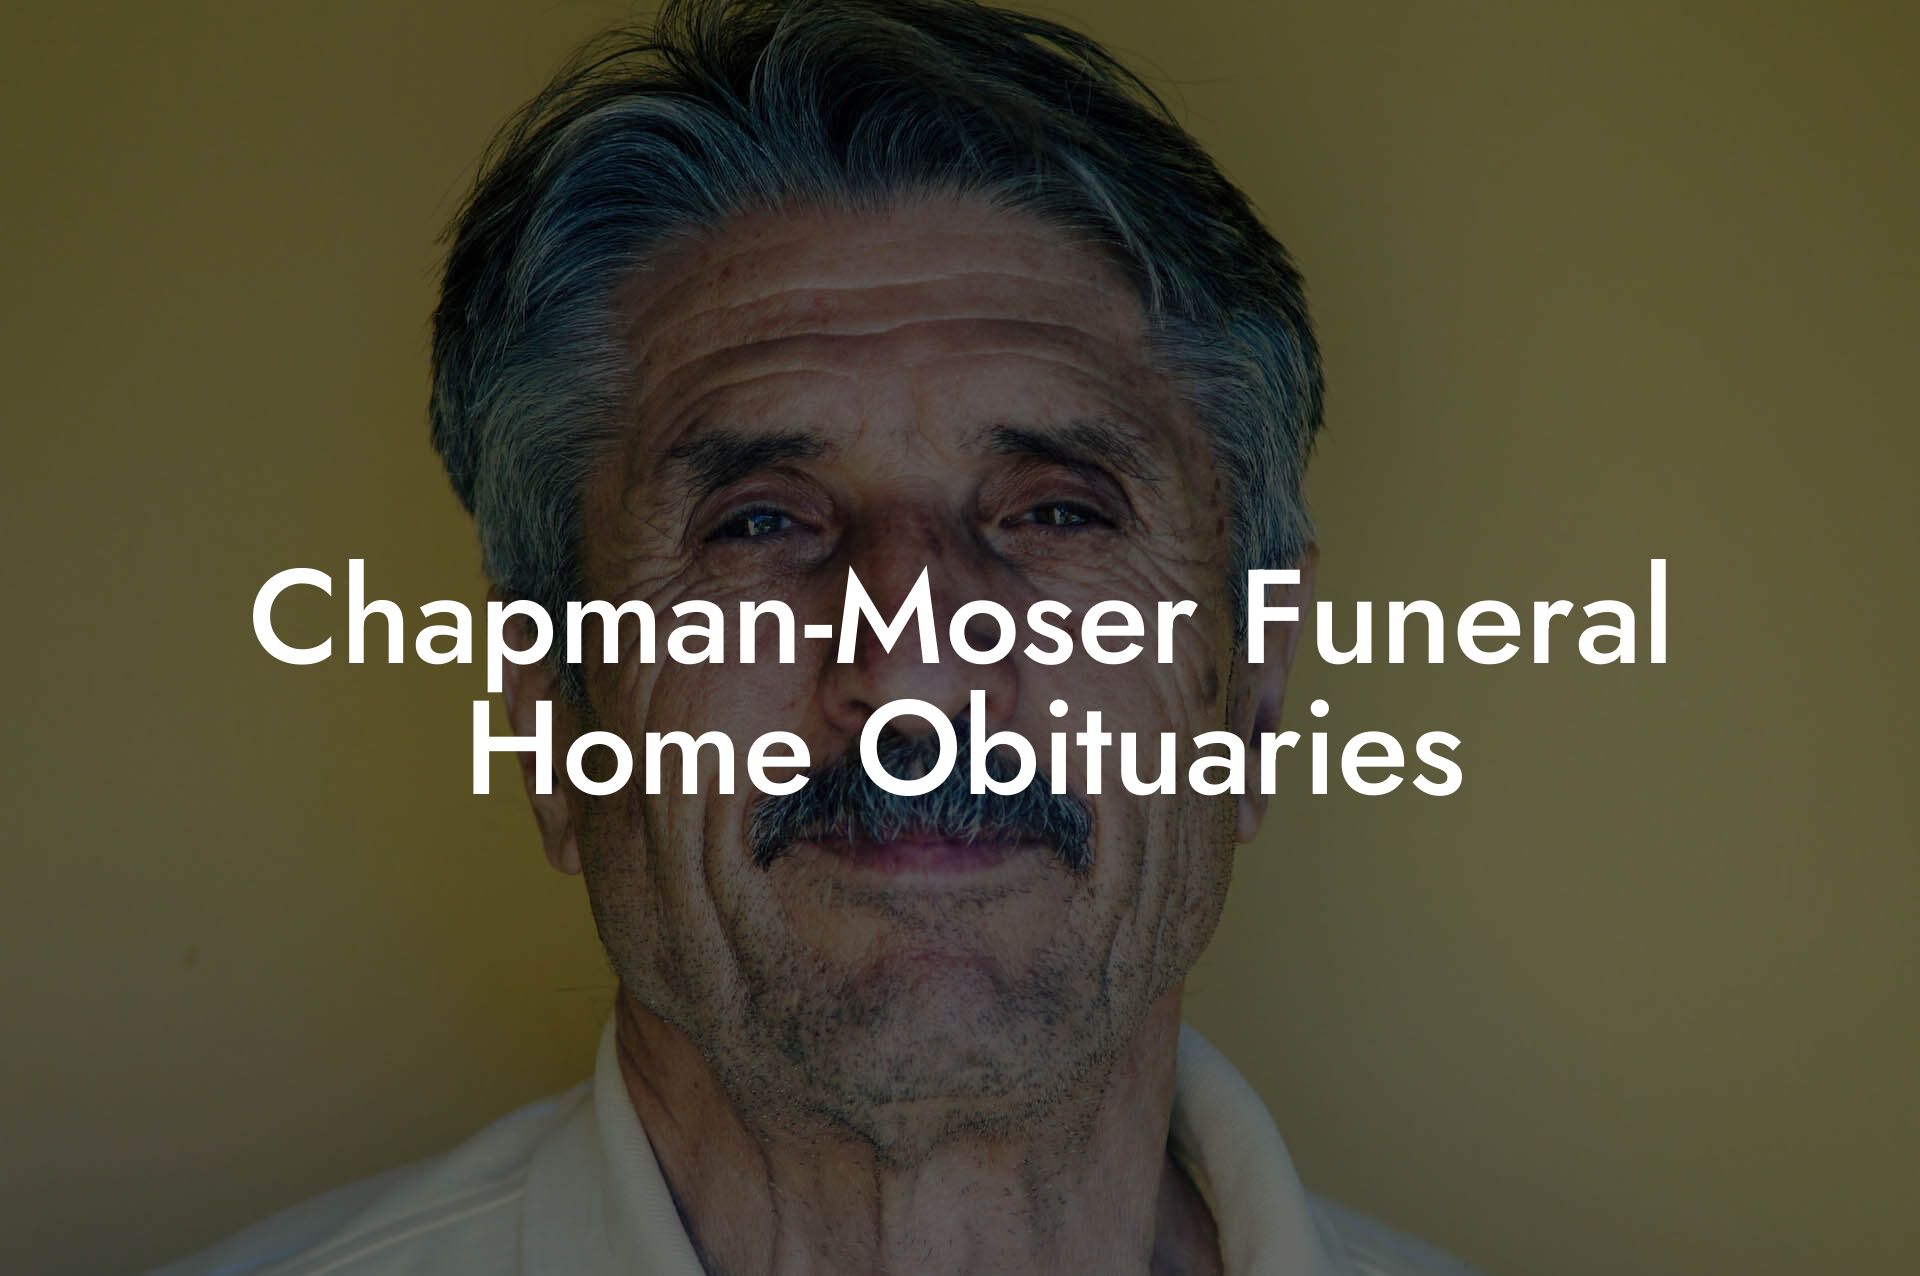 Chapman-Moser Funeral Home Obituaries